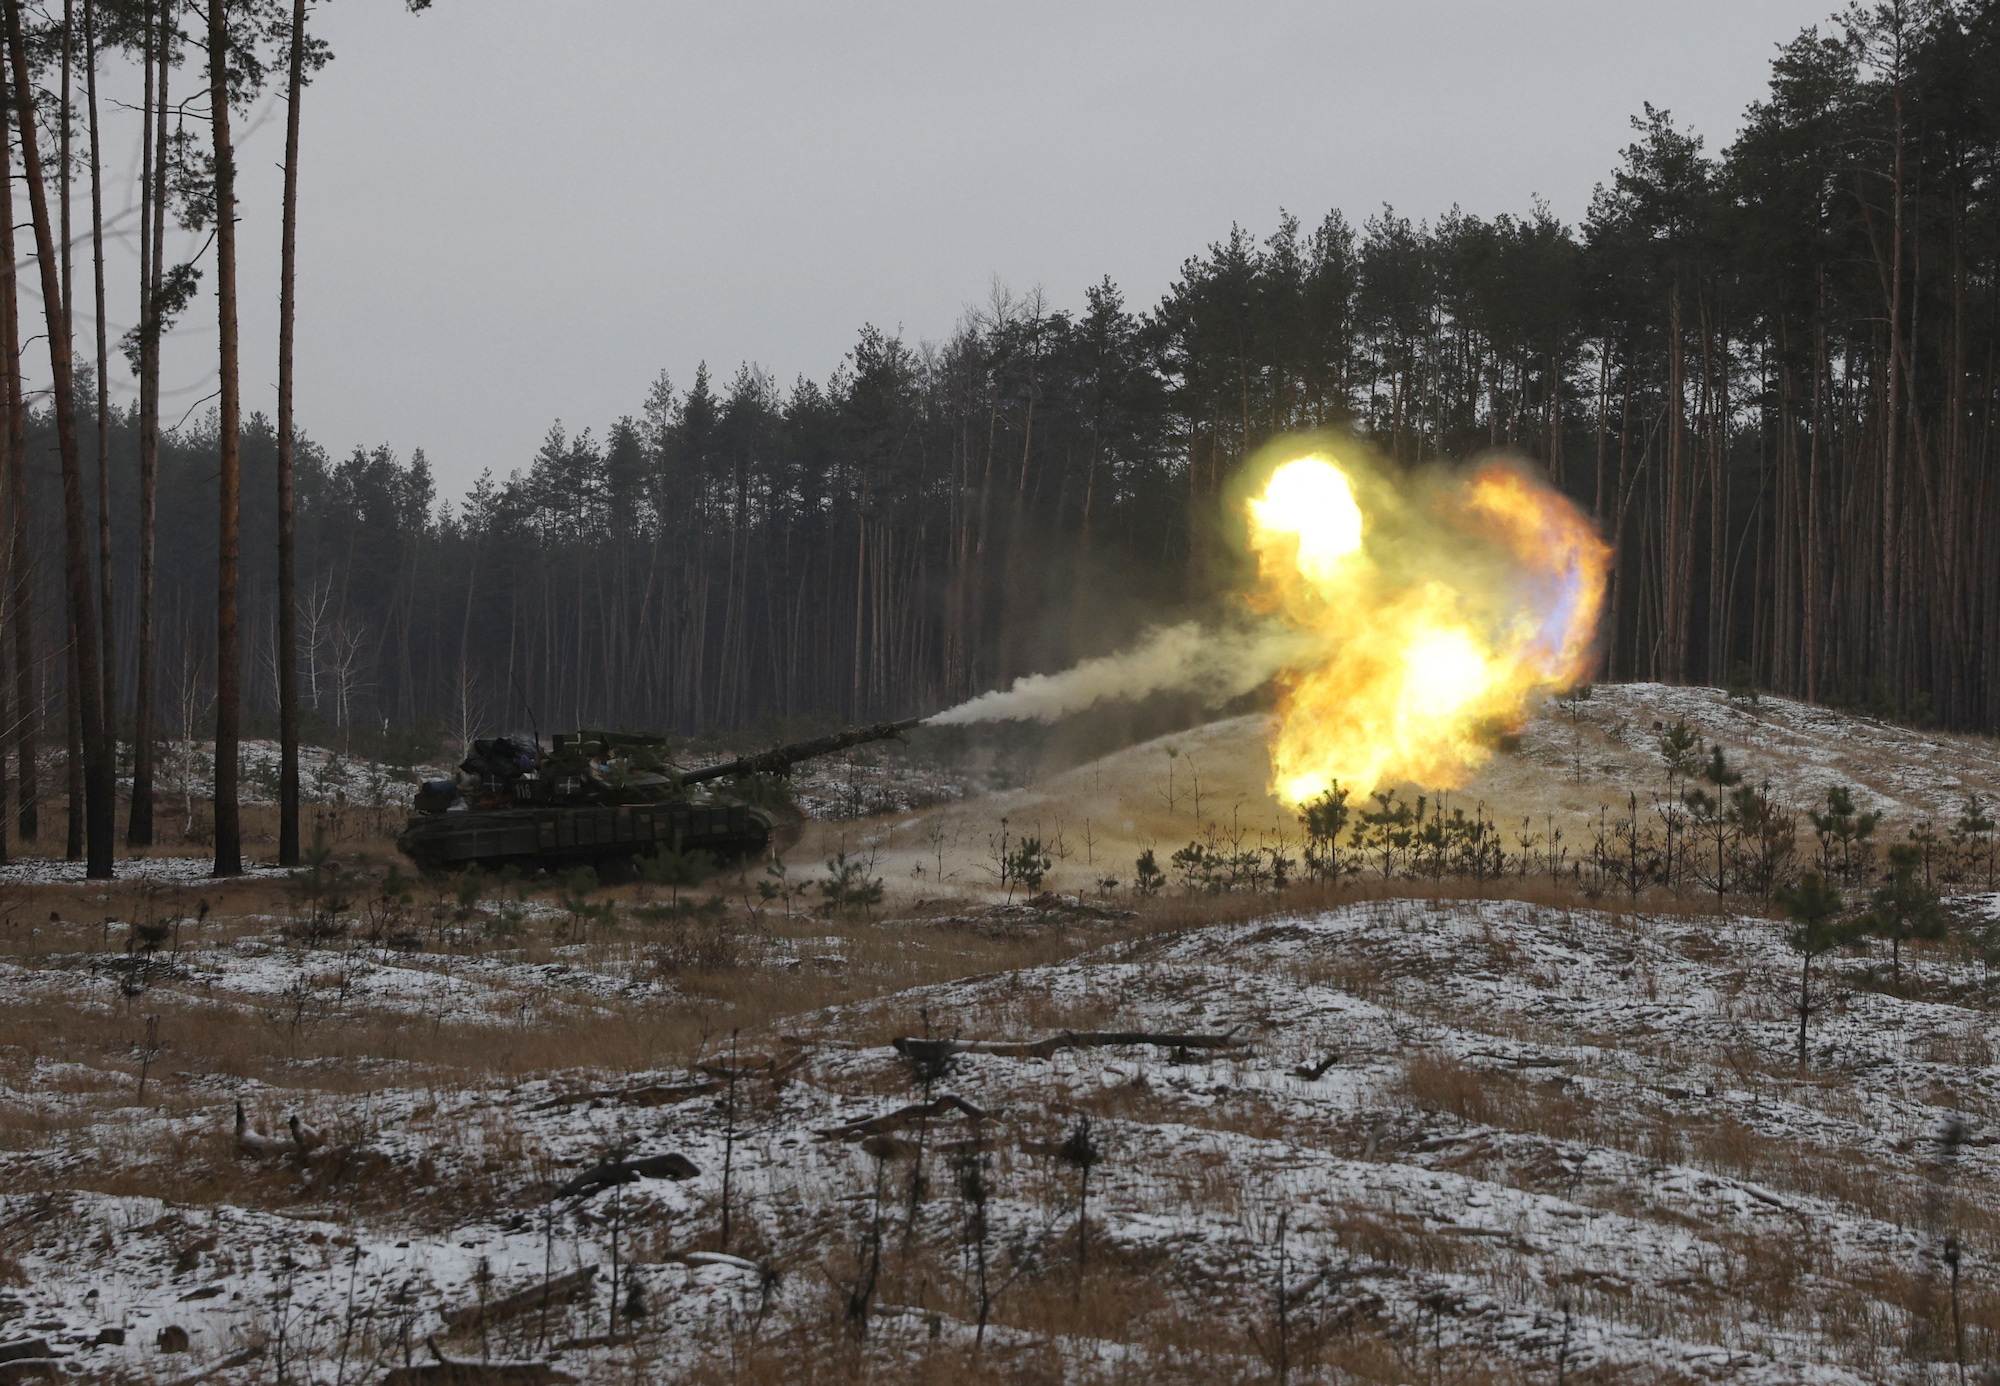 Europe gears up to send Western tanks to Ukraine